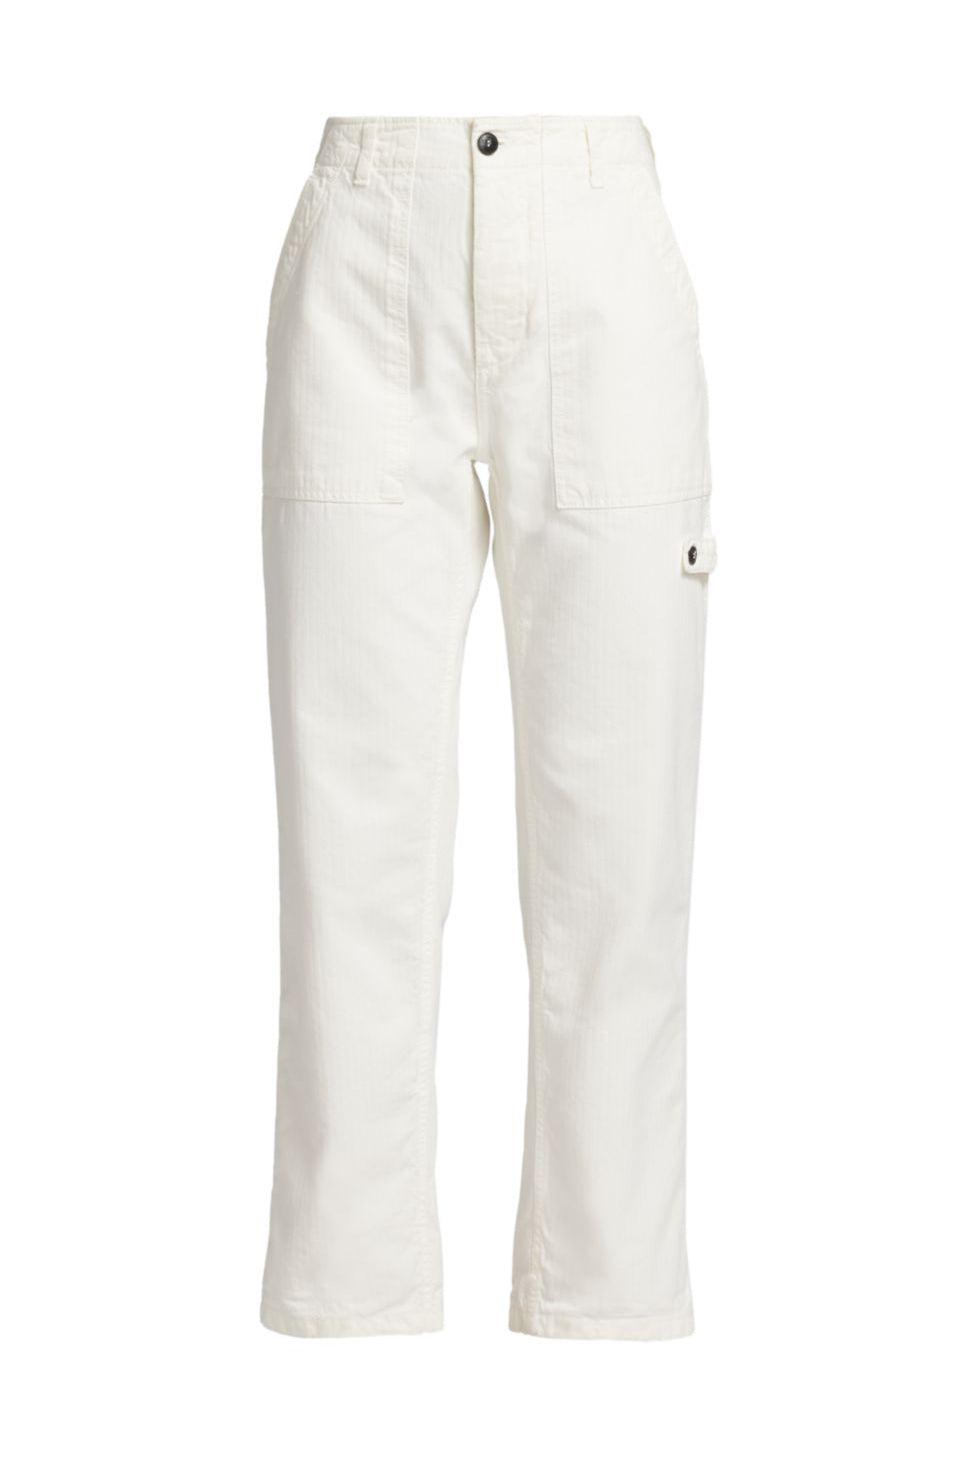 W-JERRY/T White Pants-Pant-Fortela-Debs Boutique